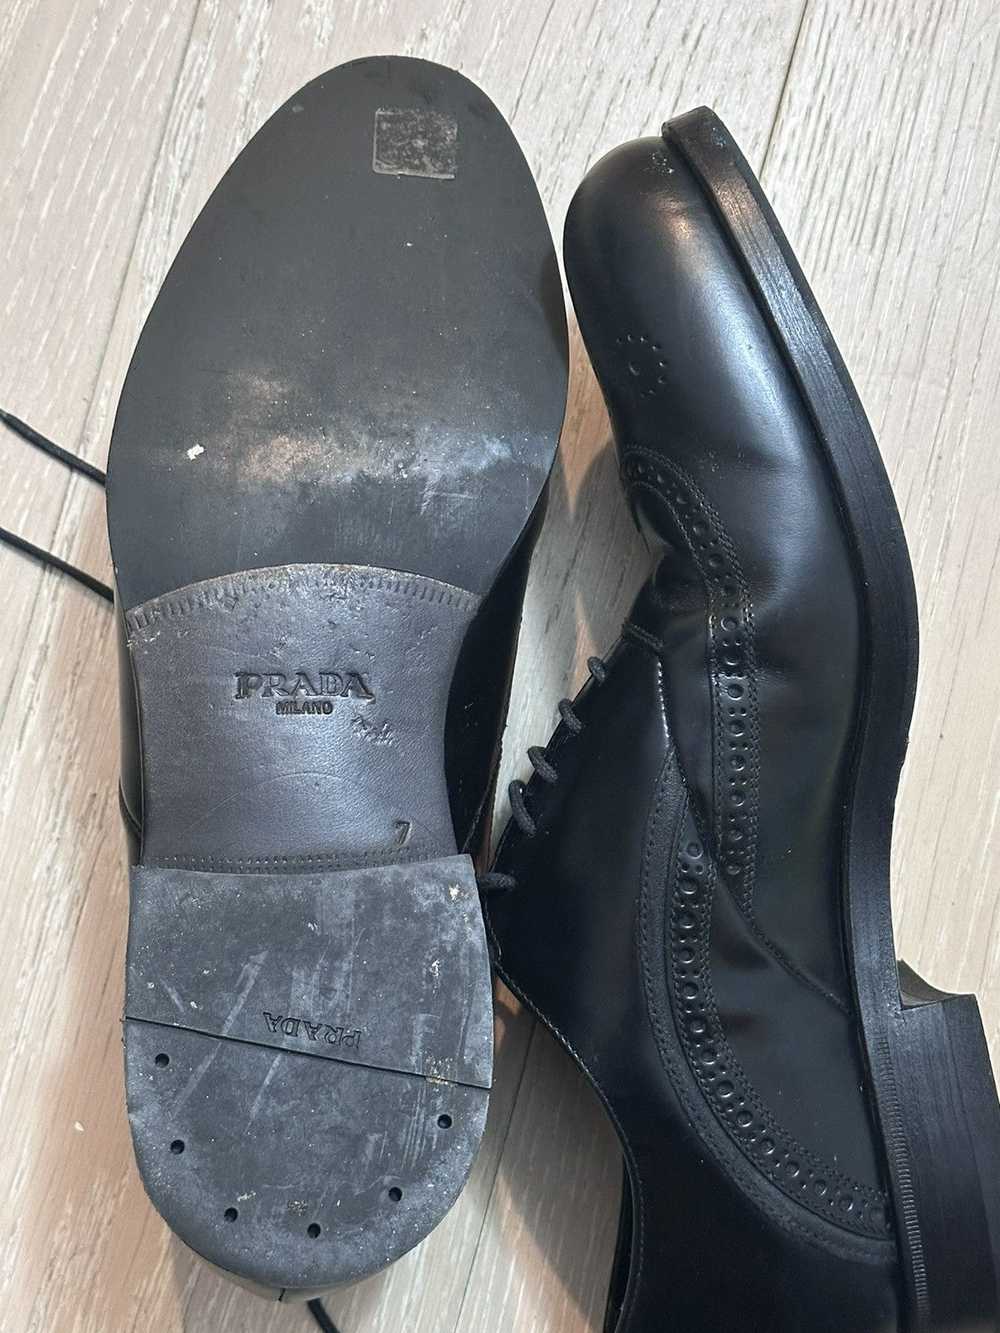 Prada Prada leather dress shoes sz 7 - image 6